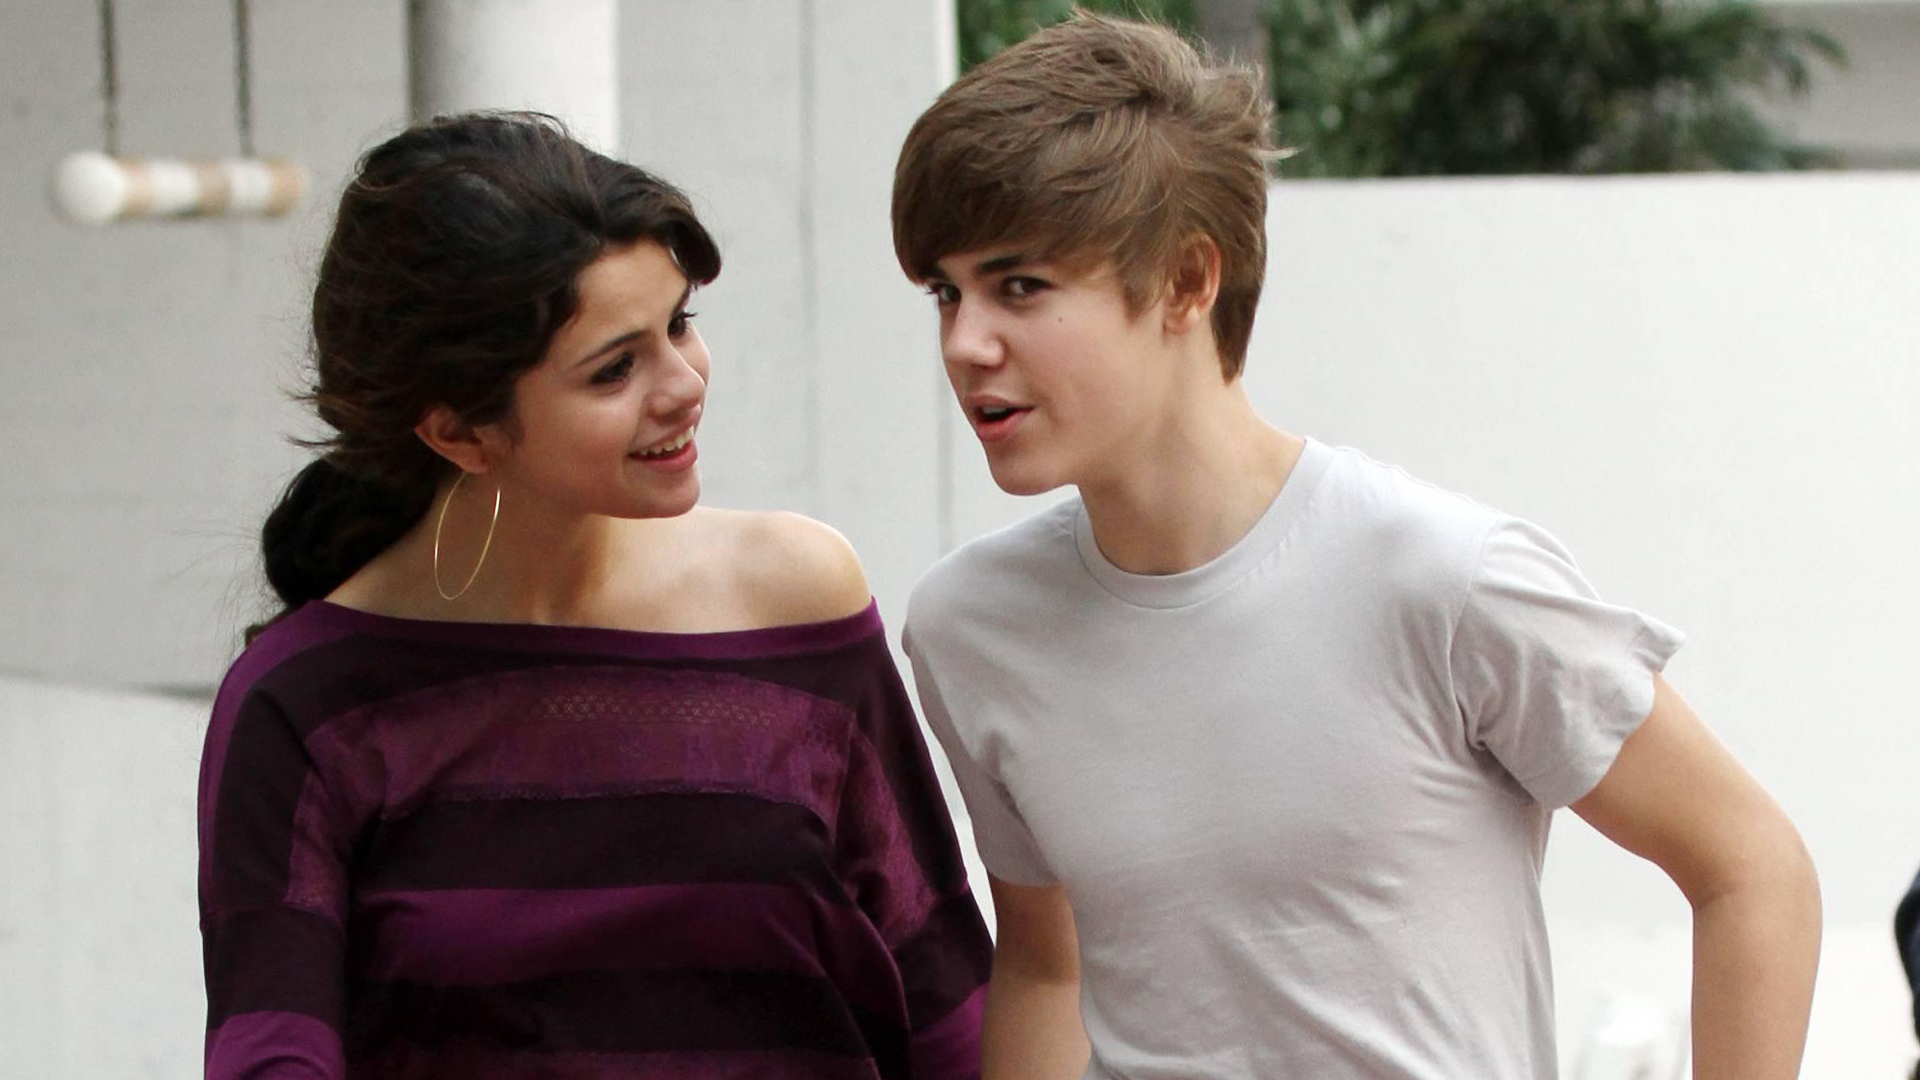 Top Wallpaper Justin Bieber And Selena Gomez